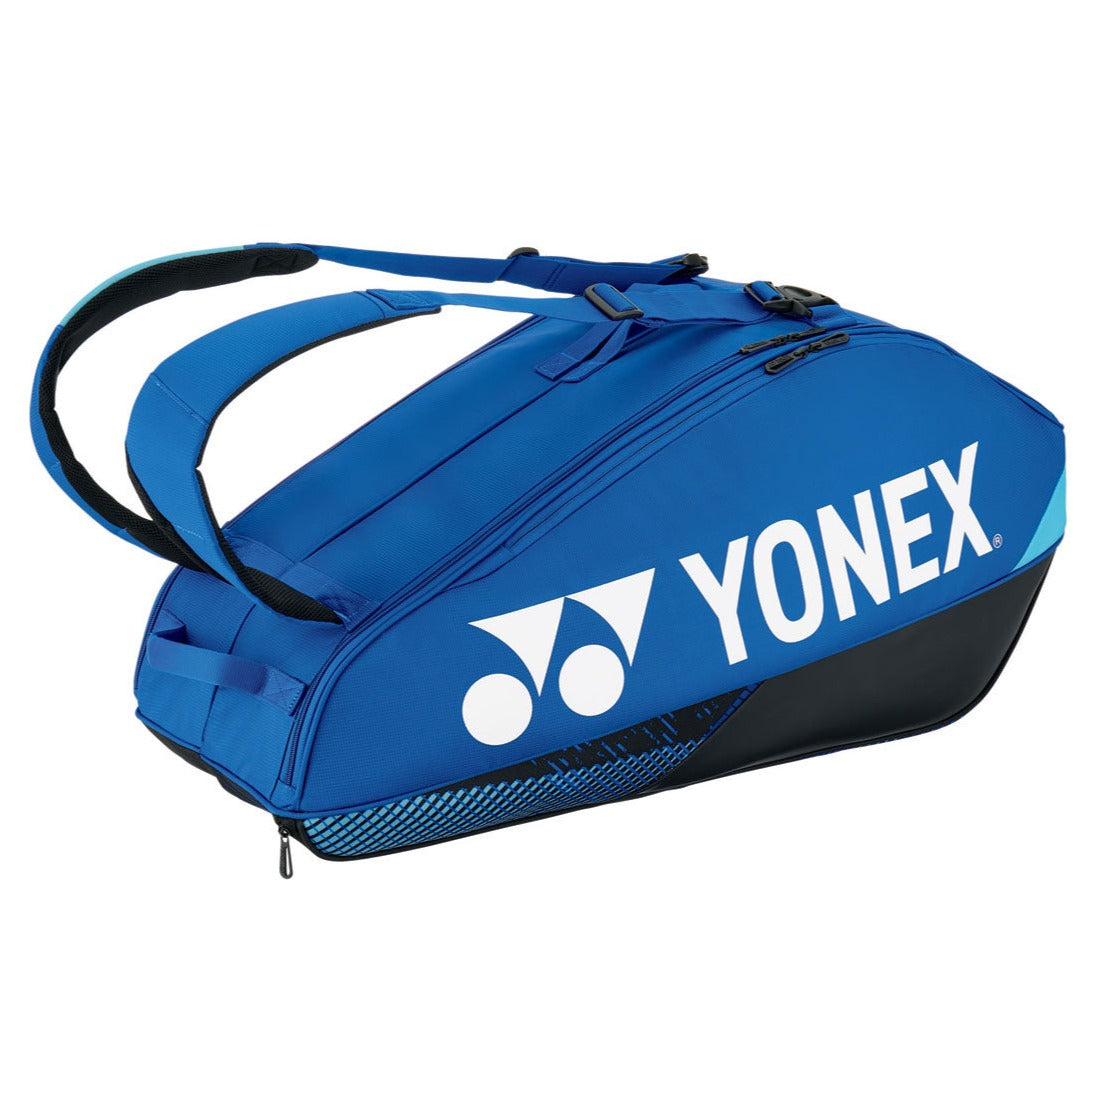 Yonex Racketbag 92426 cobalt blue